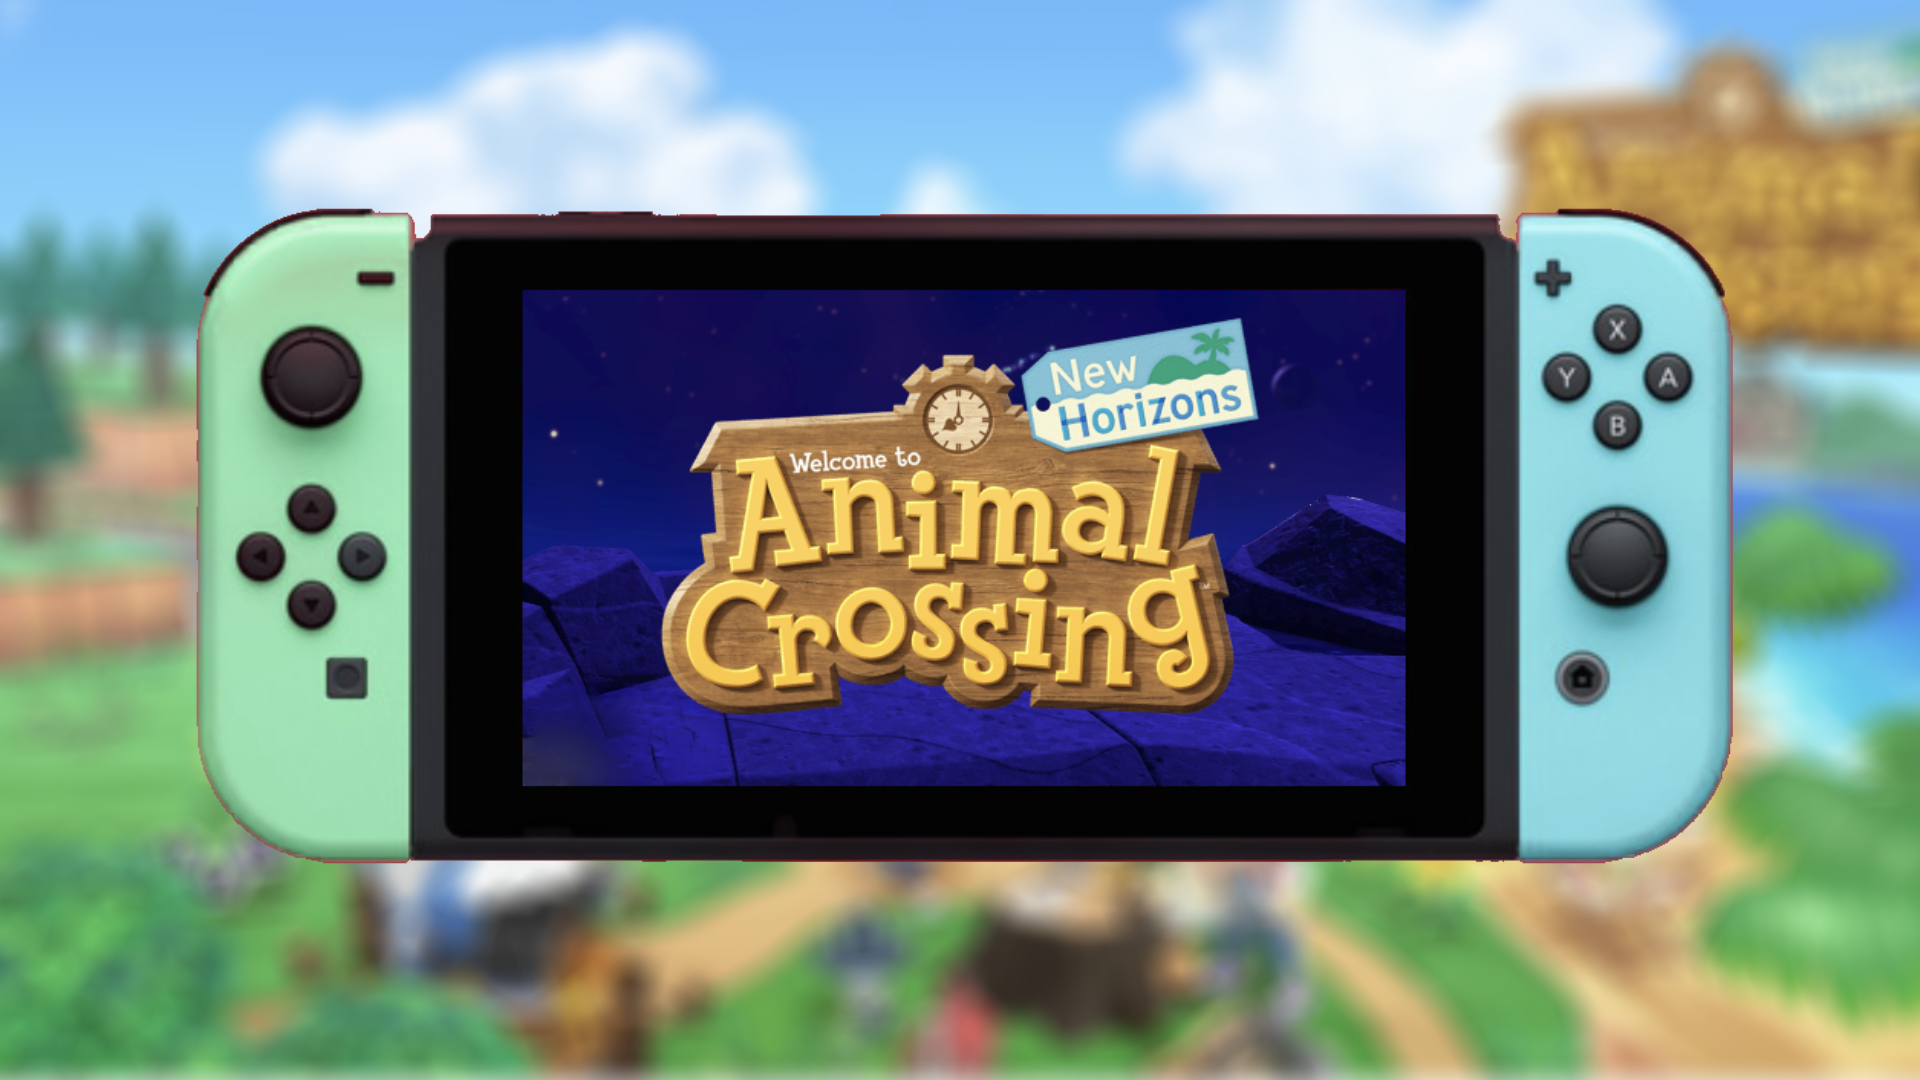 animal crossing game sales